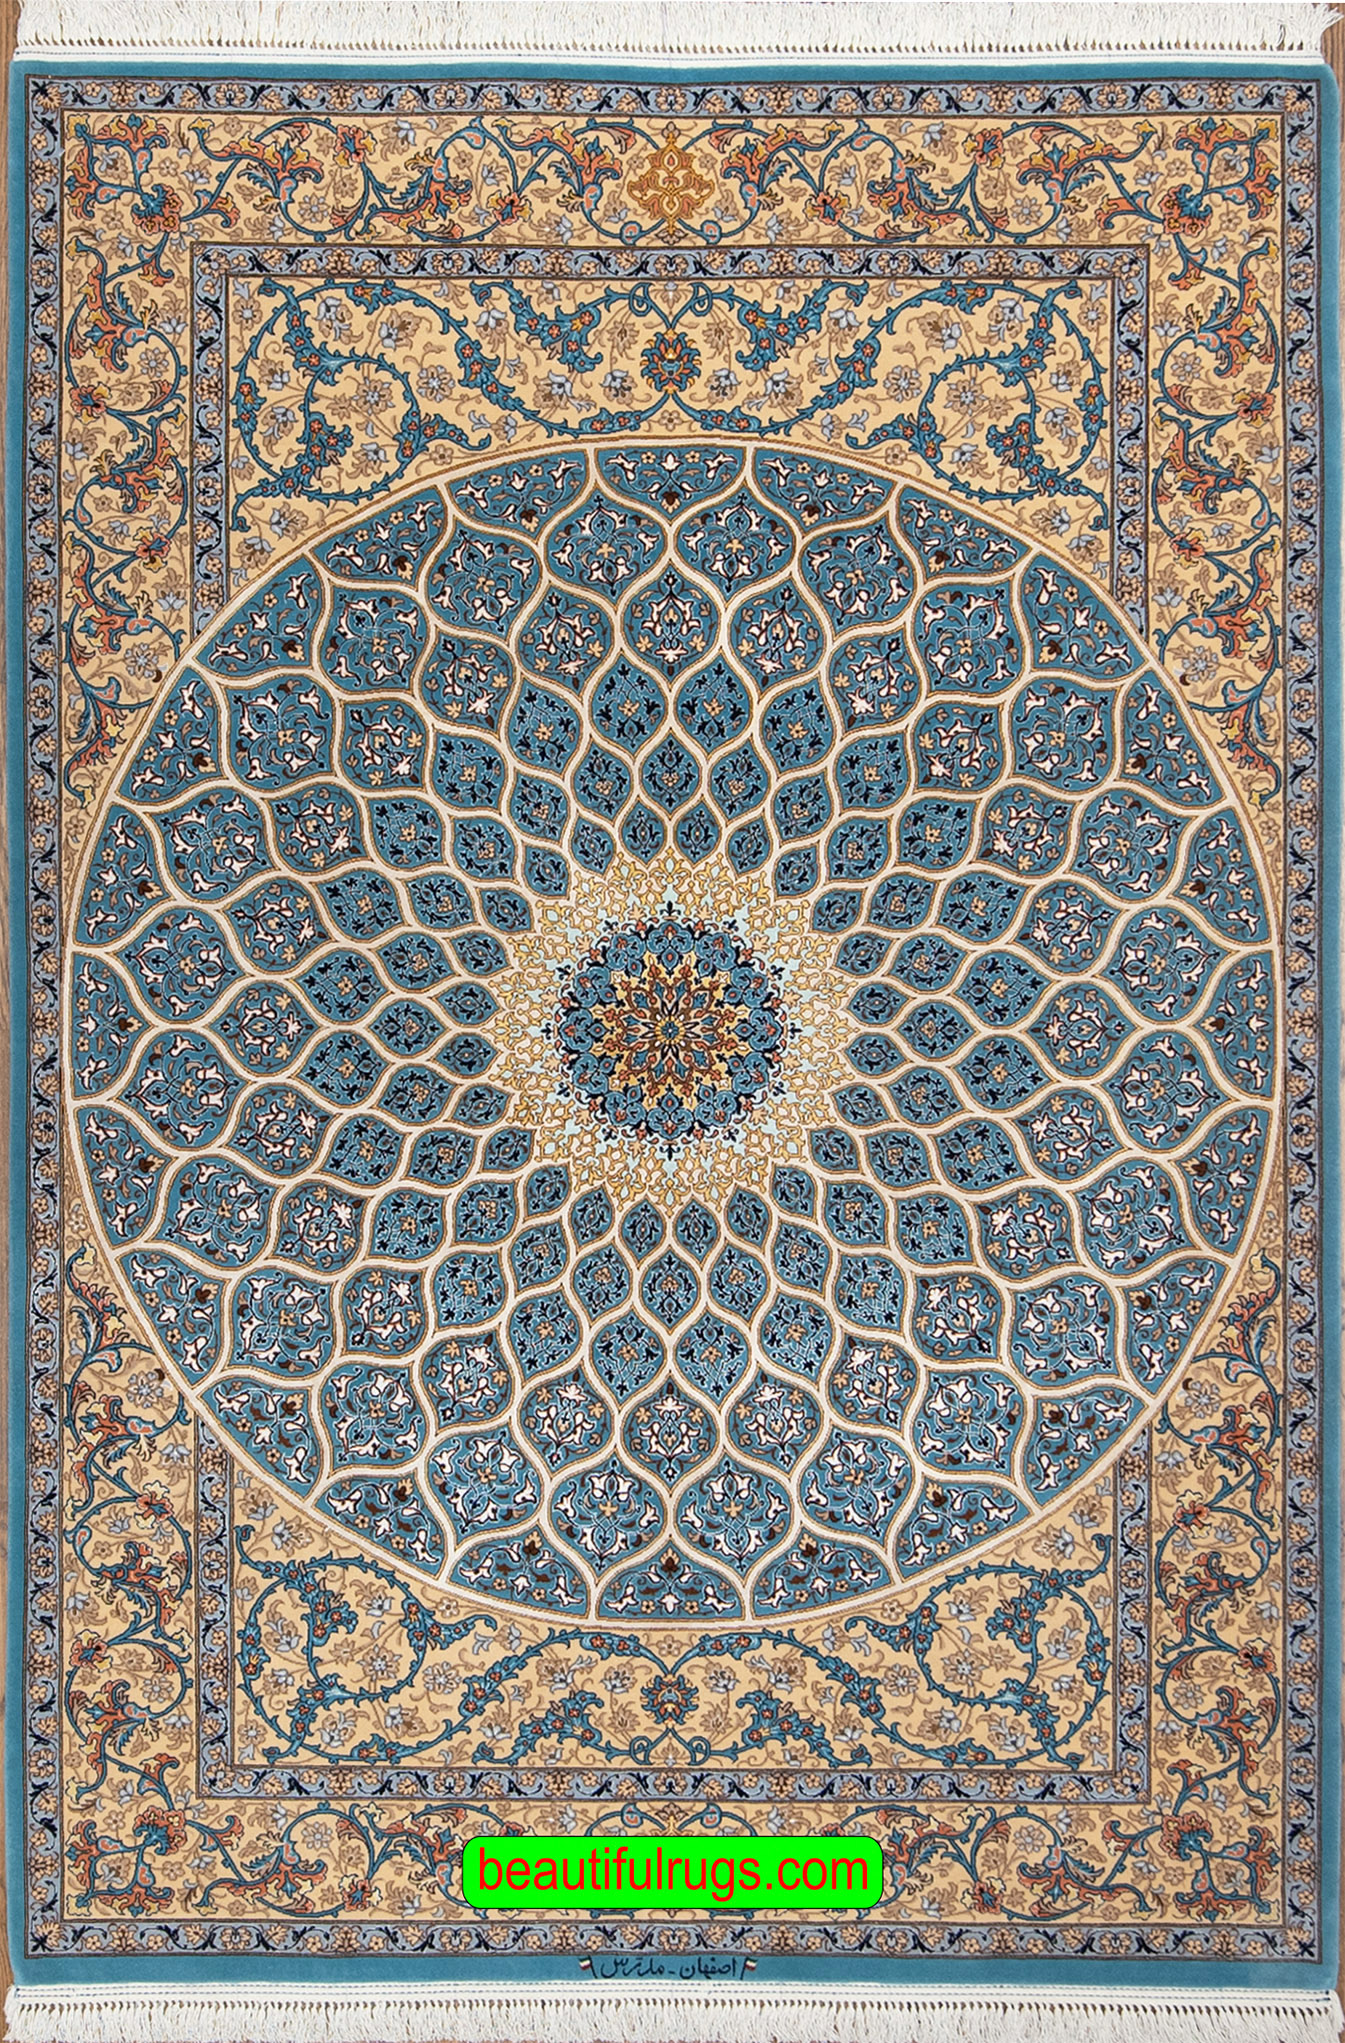 Handmade Persian Isfahan rug, blue mandala rug, kork wool and silk. Size 5.2x7.6.